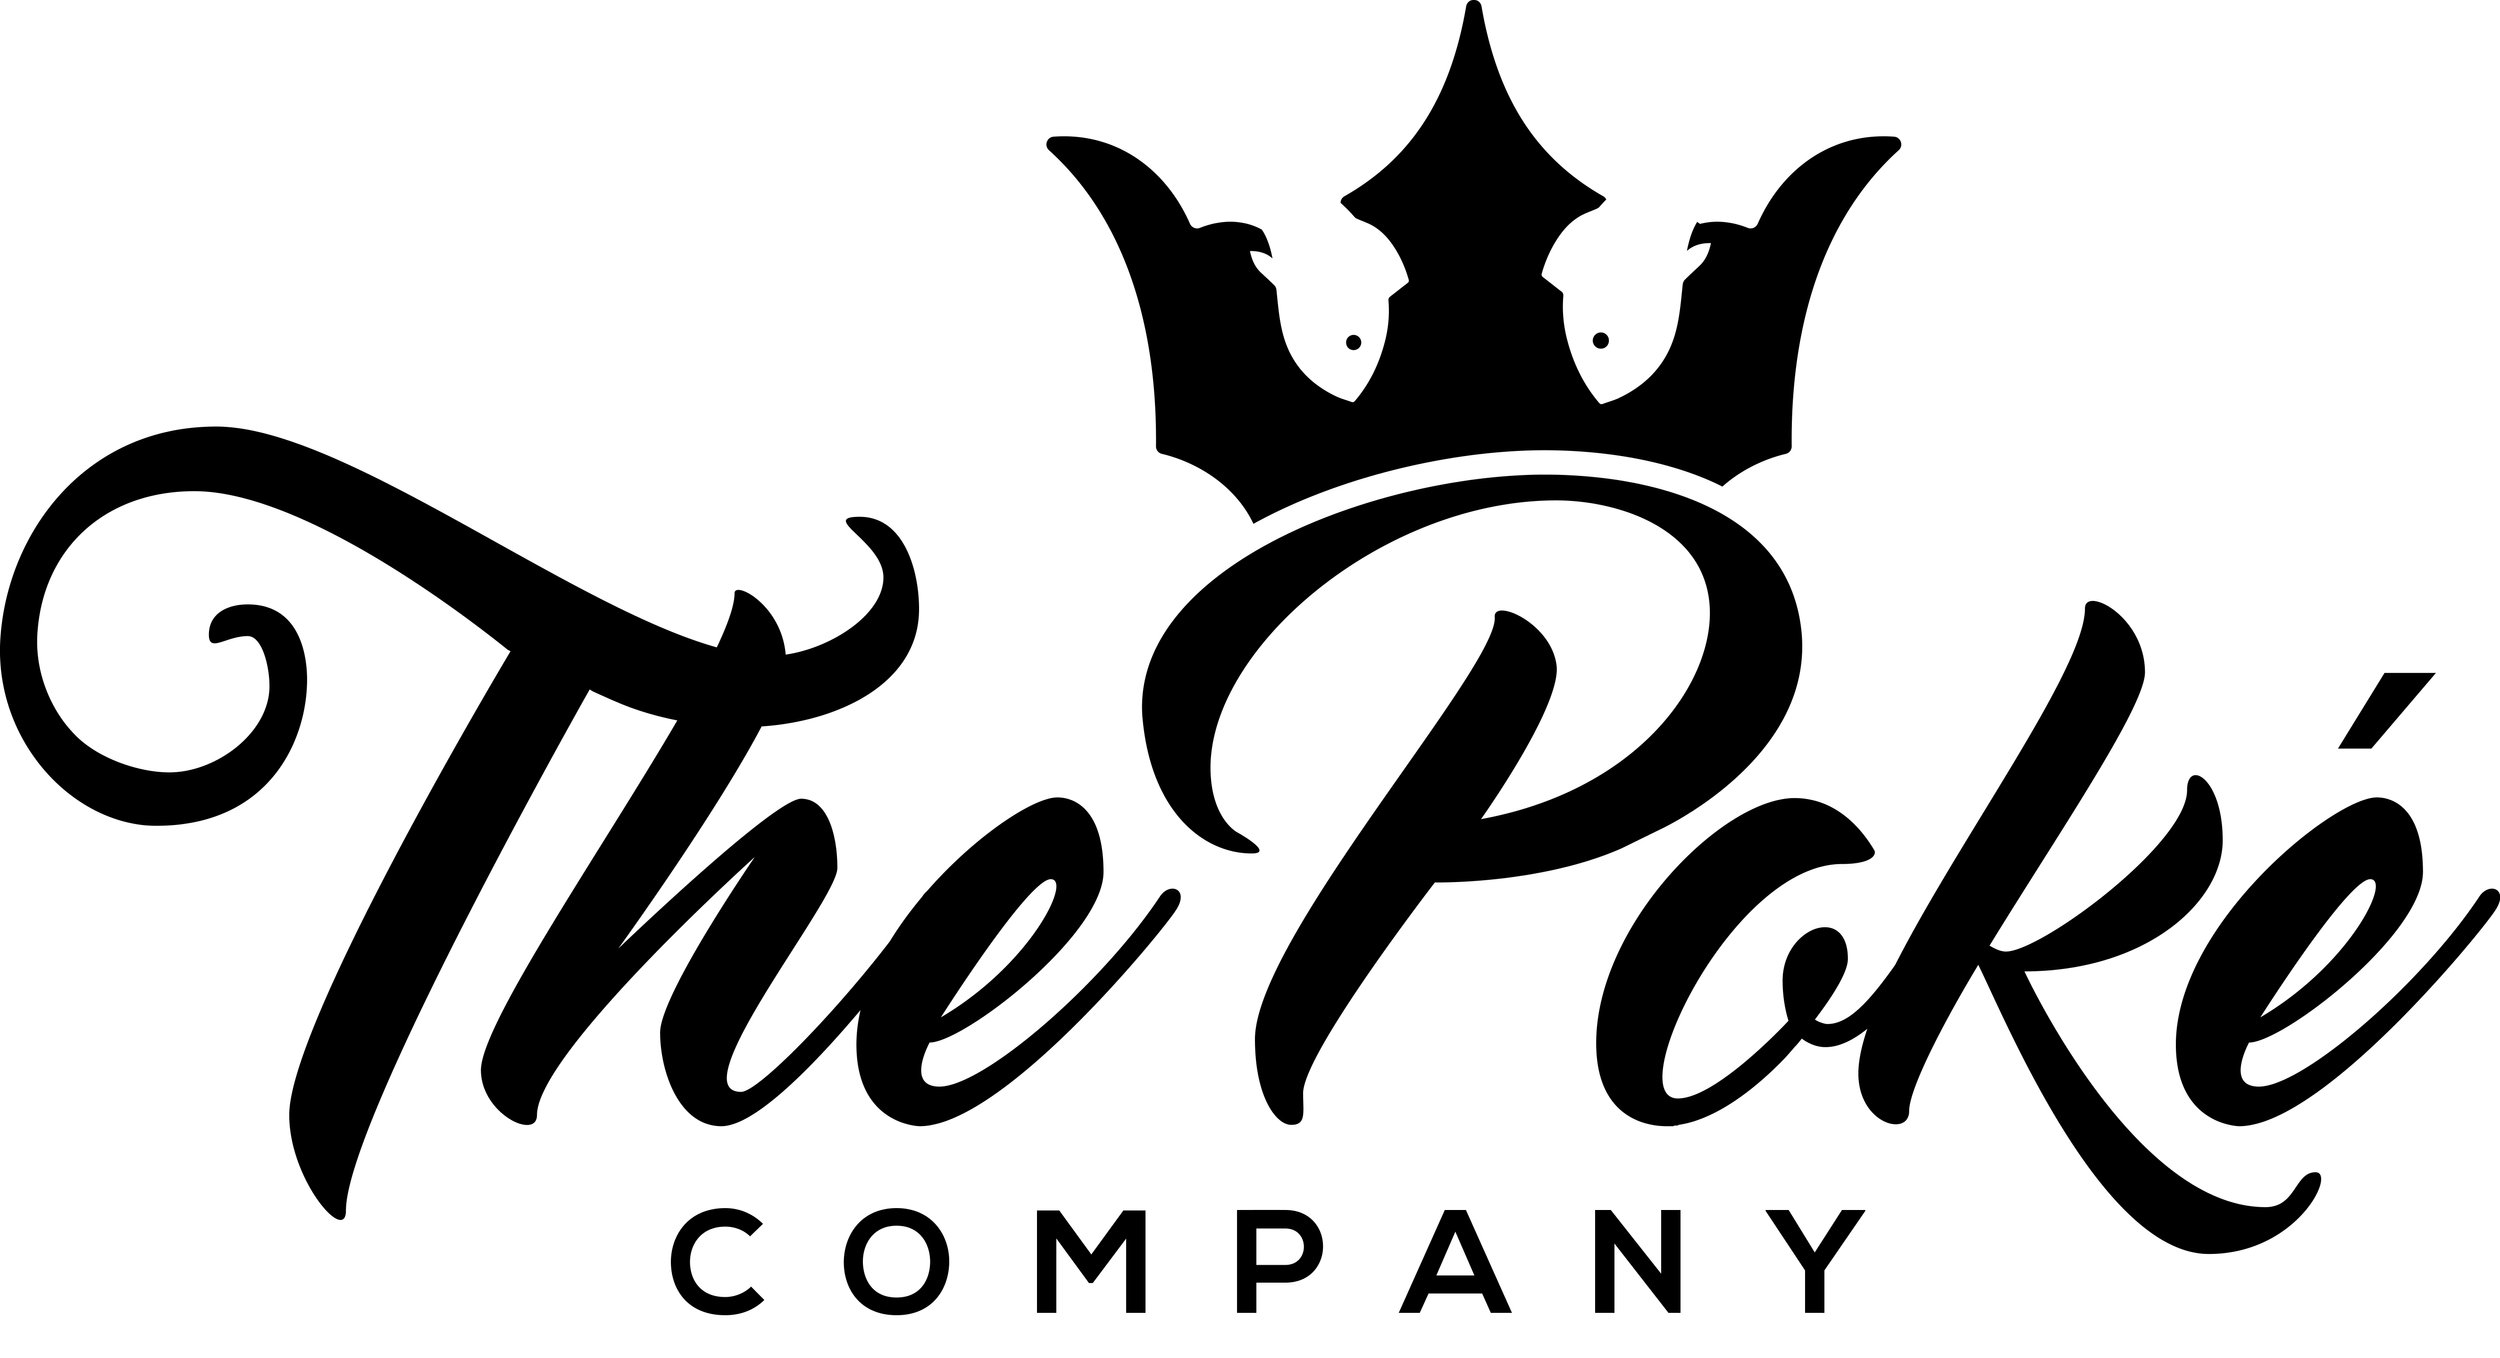 poke company logo NEWEST.jpg